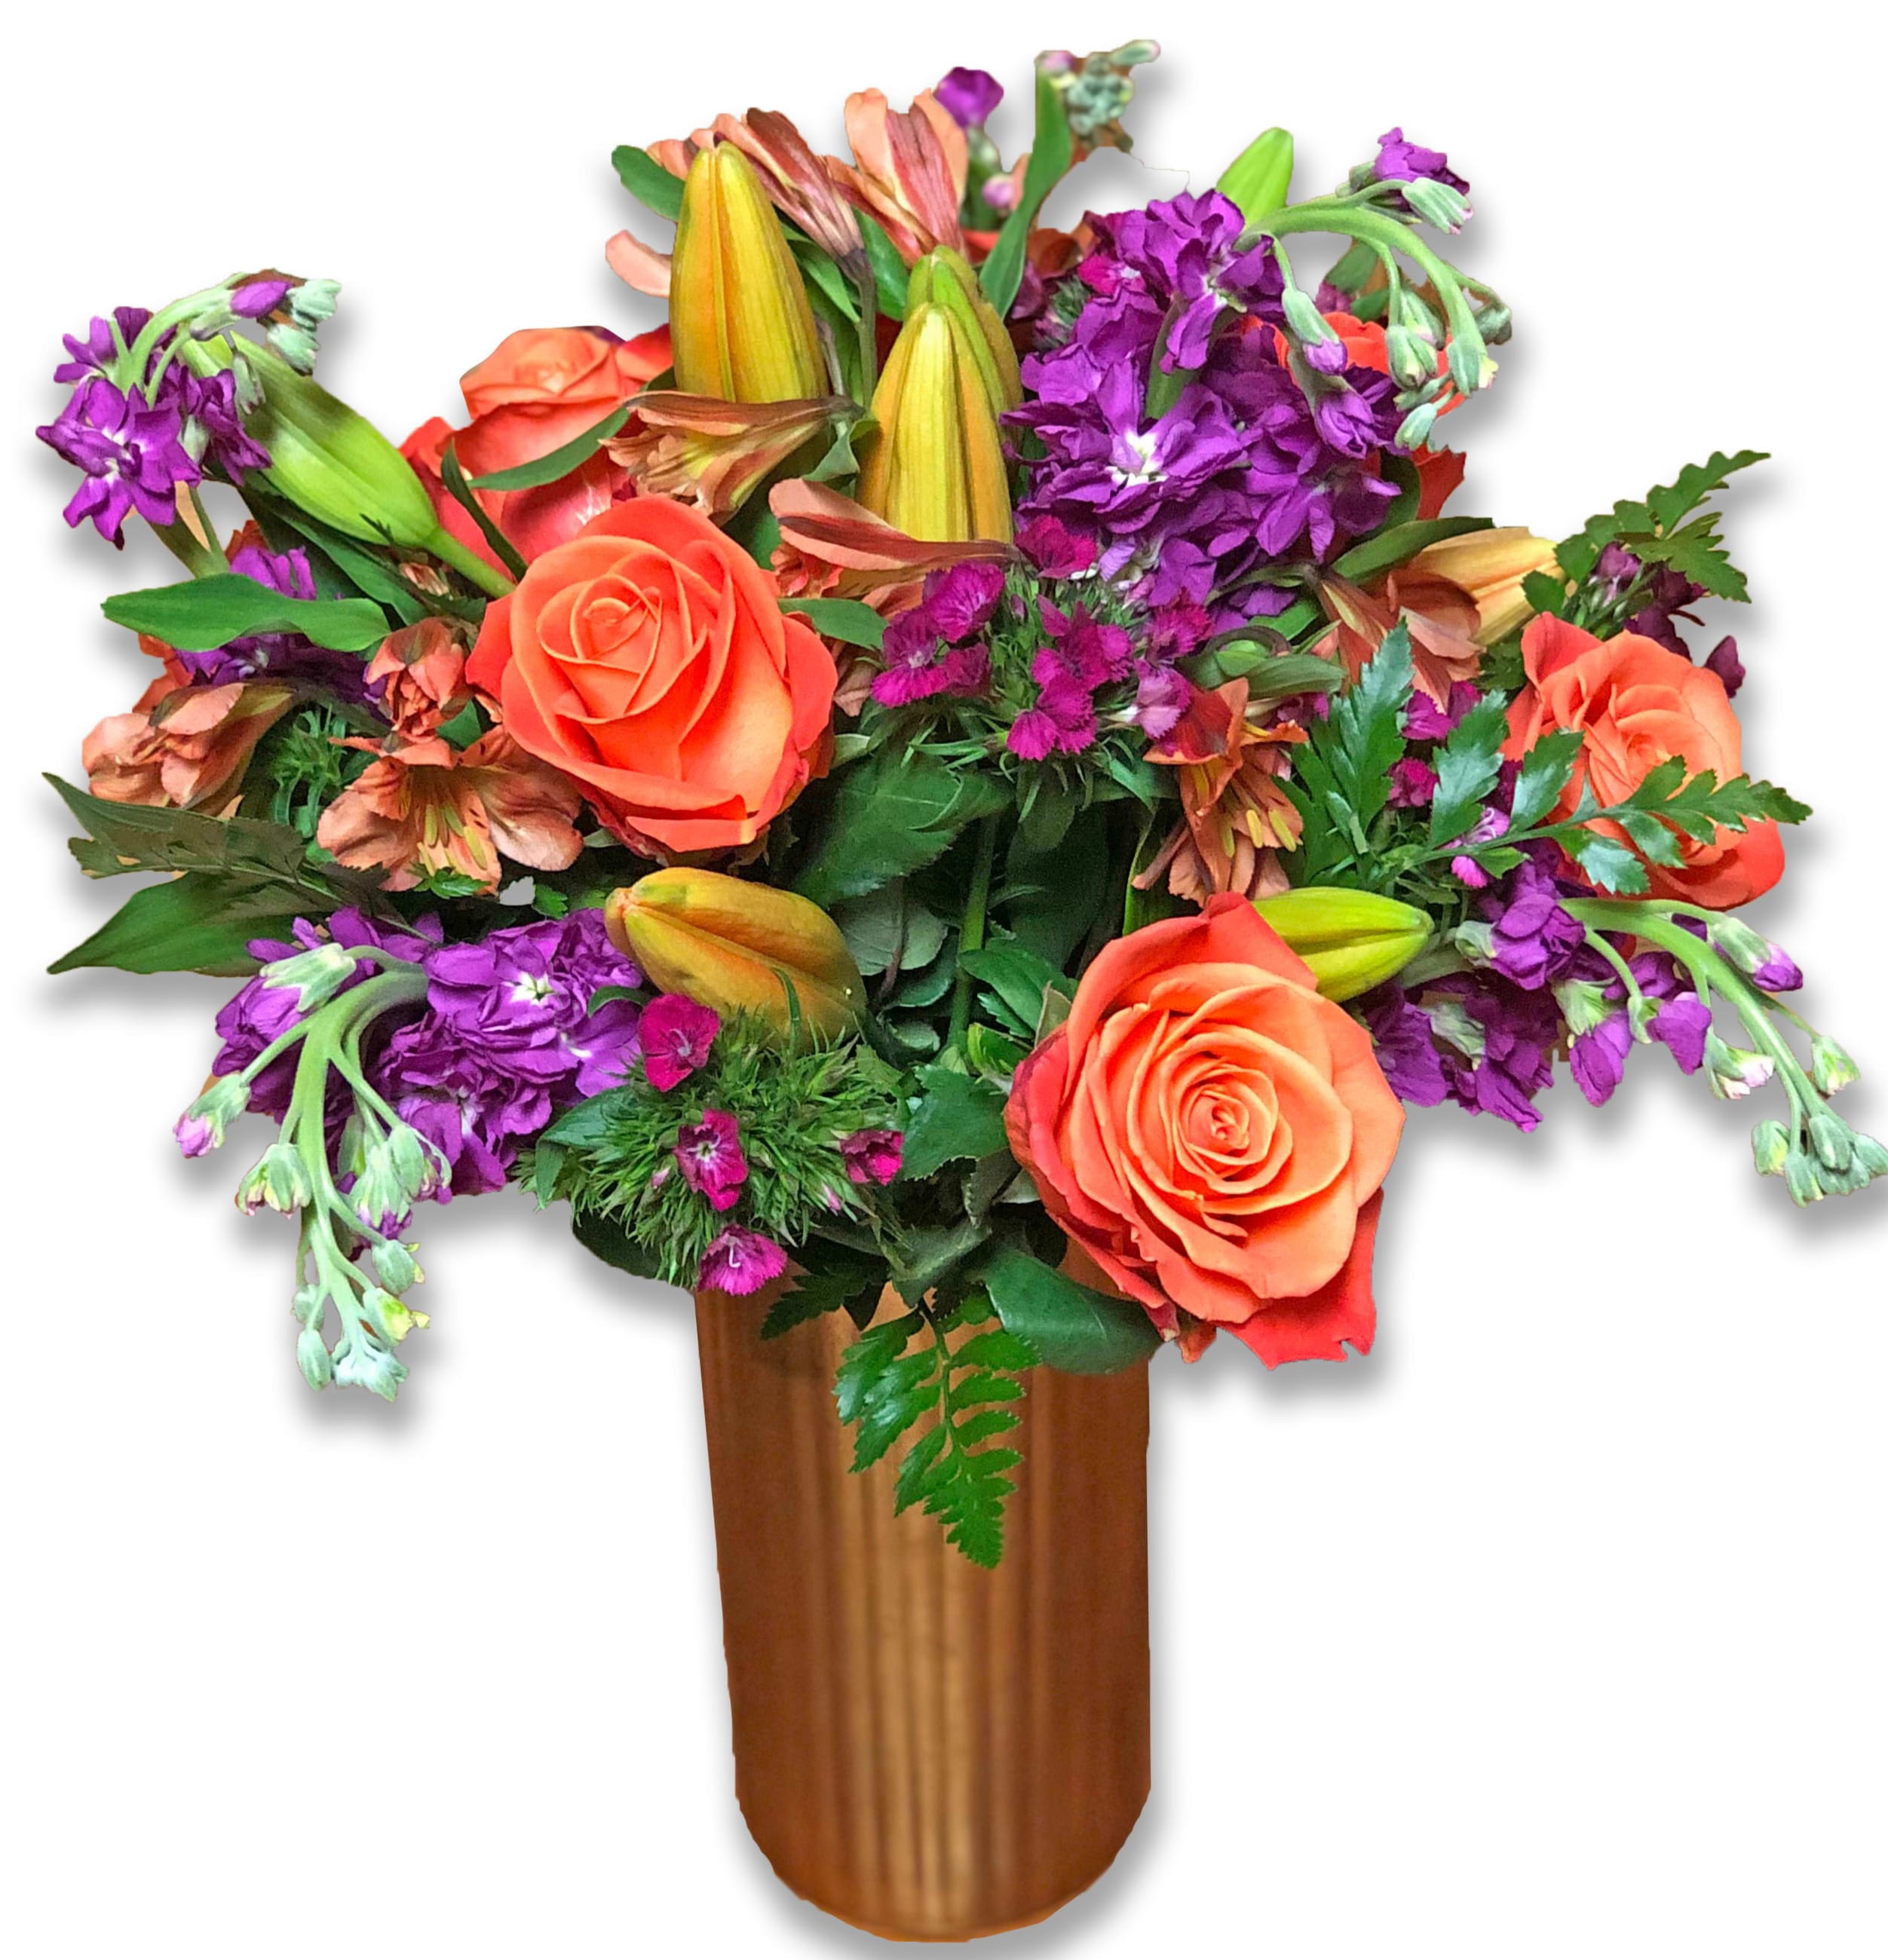 Flower Bouquet: How To Harvest & Arrange